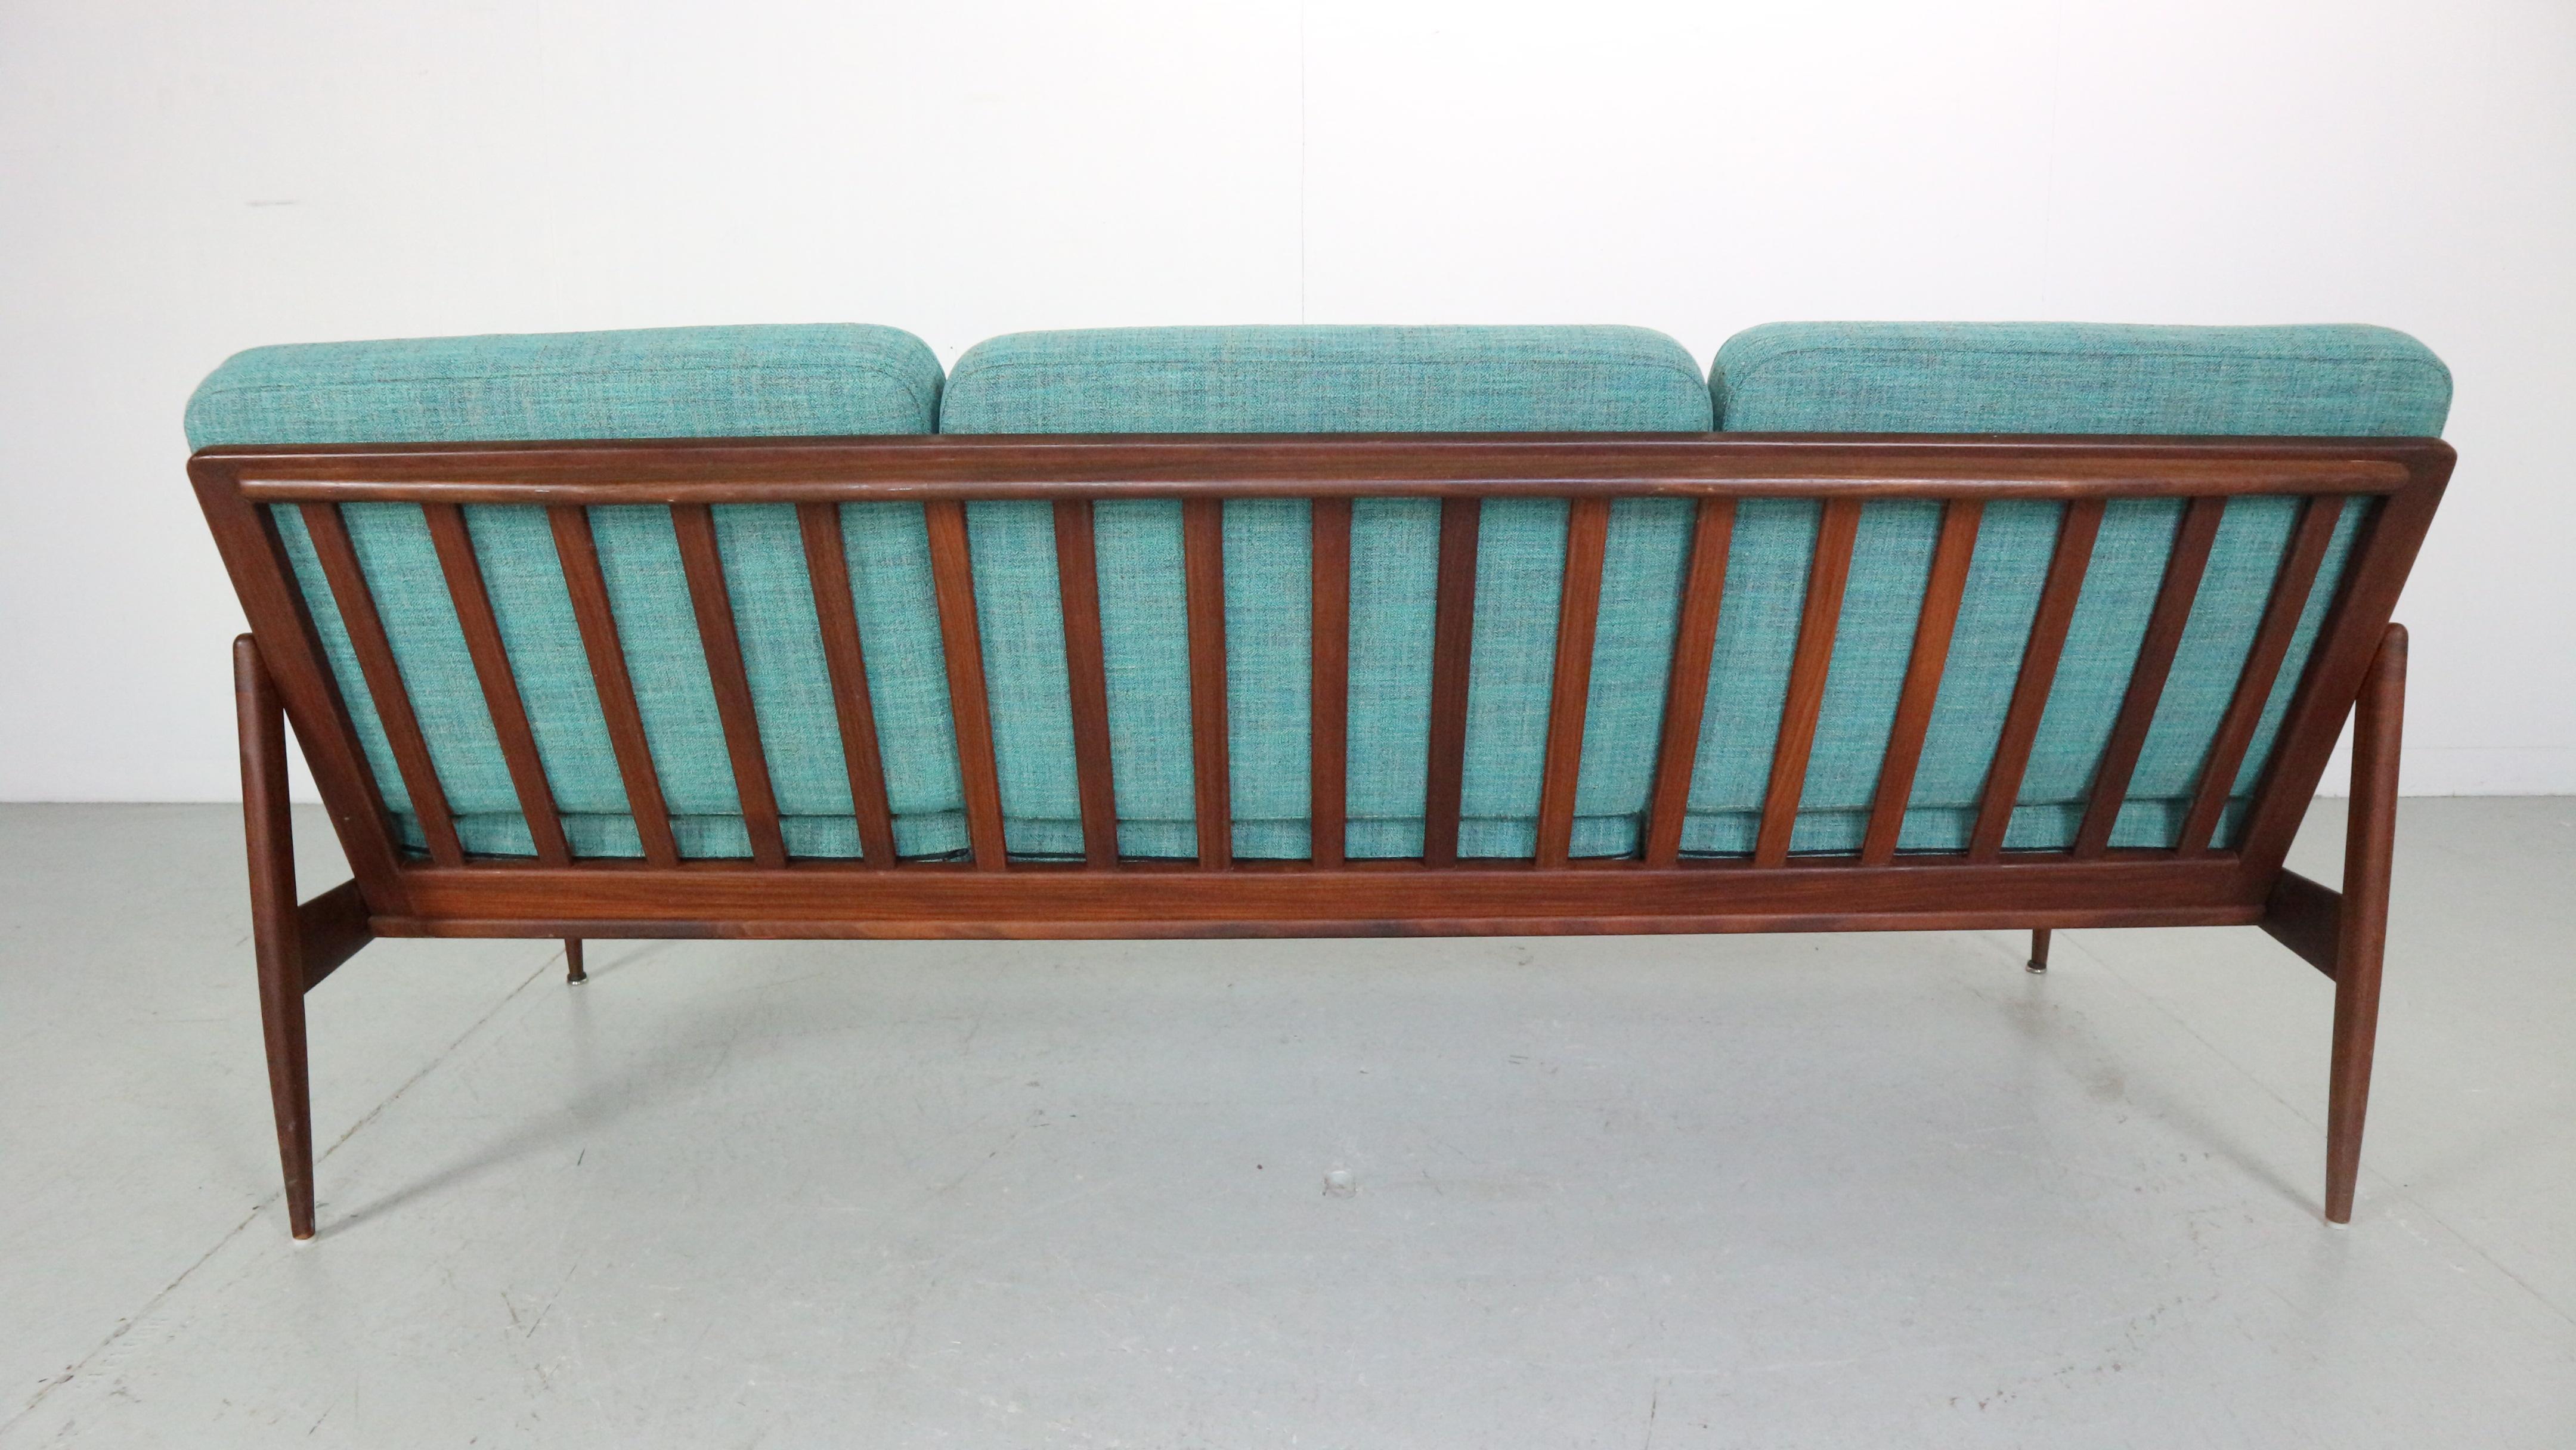 Ib Kofod-Larsen Three Seater Teak Sofa For Ope,  1950's Sweden For Sale 1